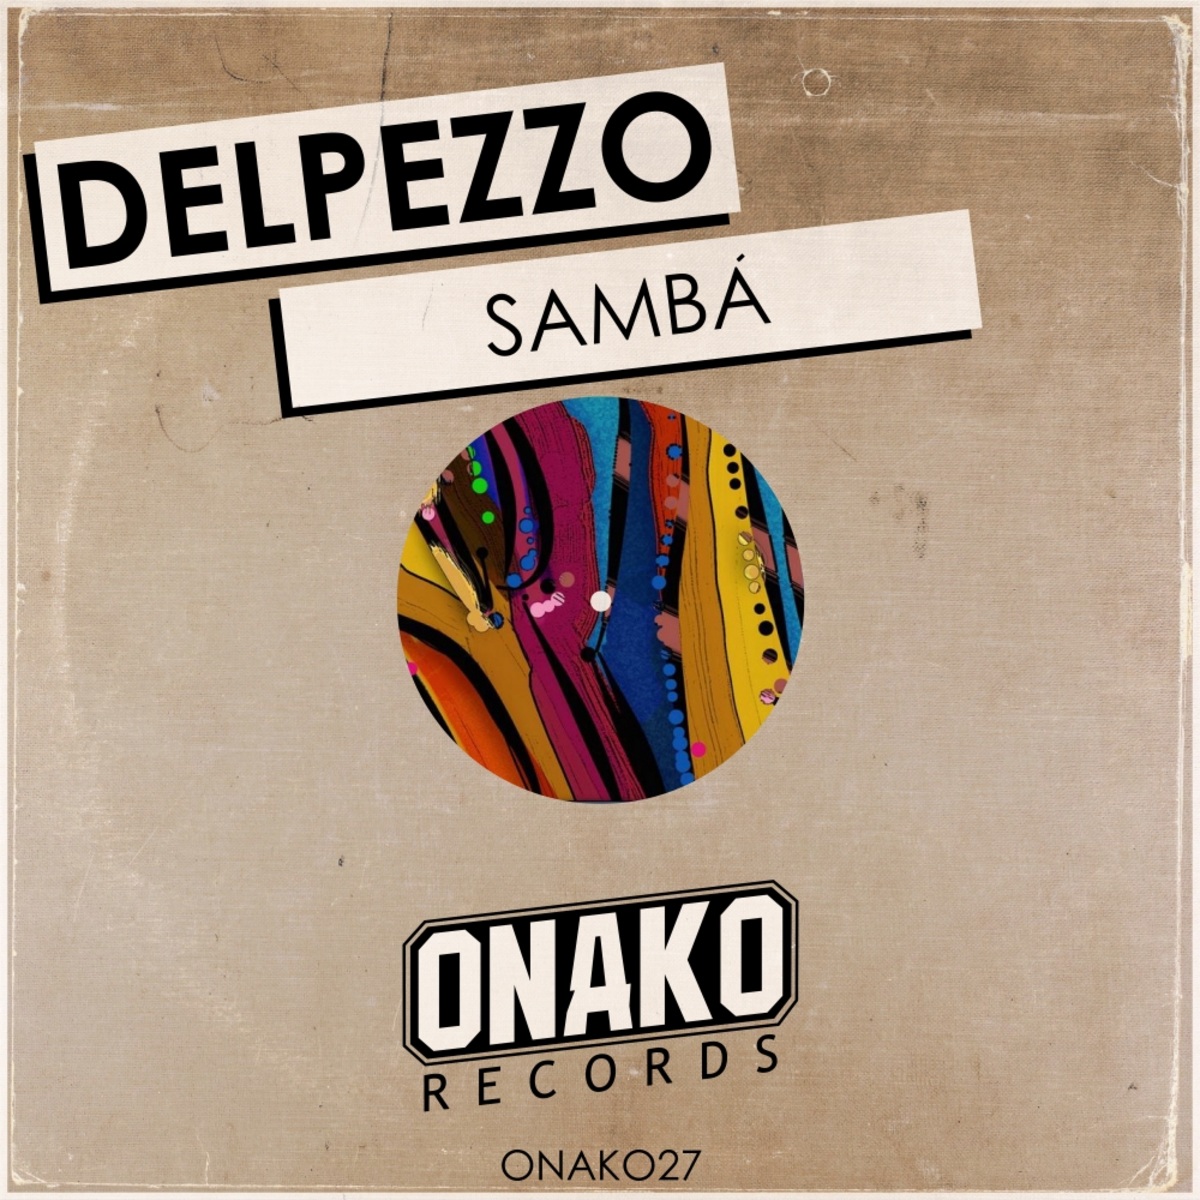 Delpezzo - Sambá / Onako Records